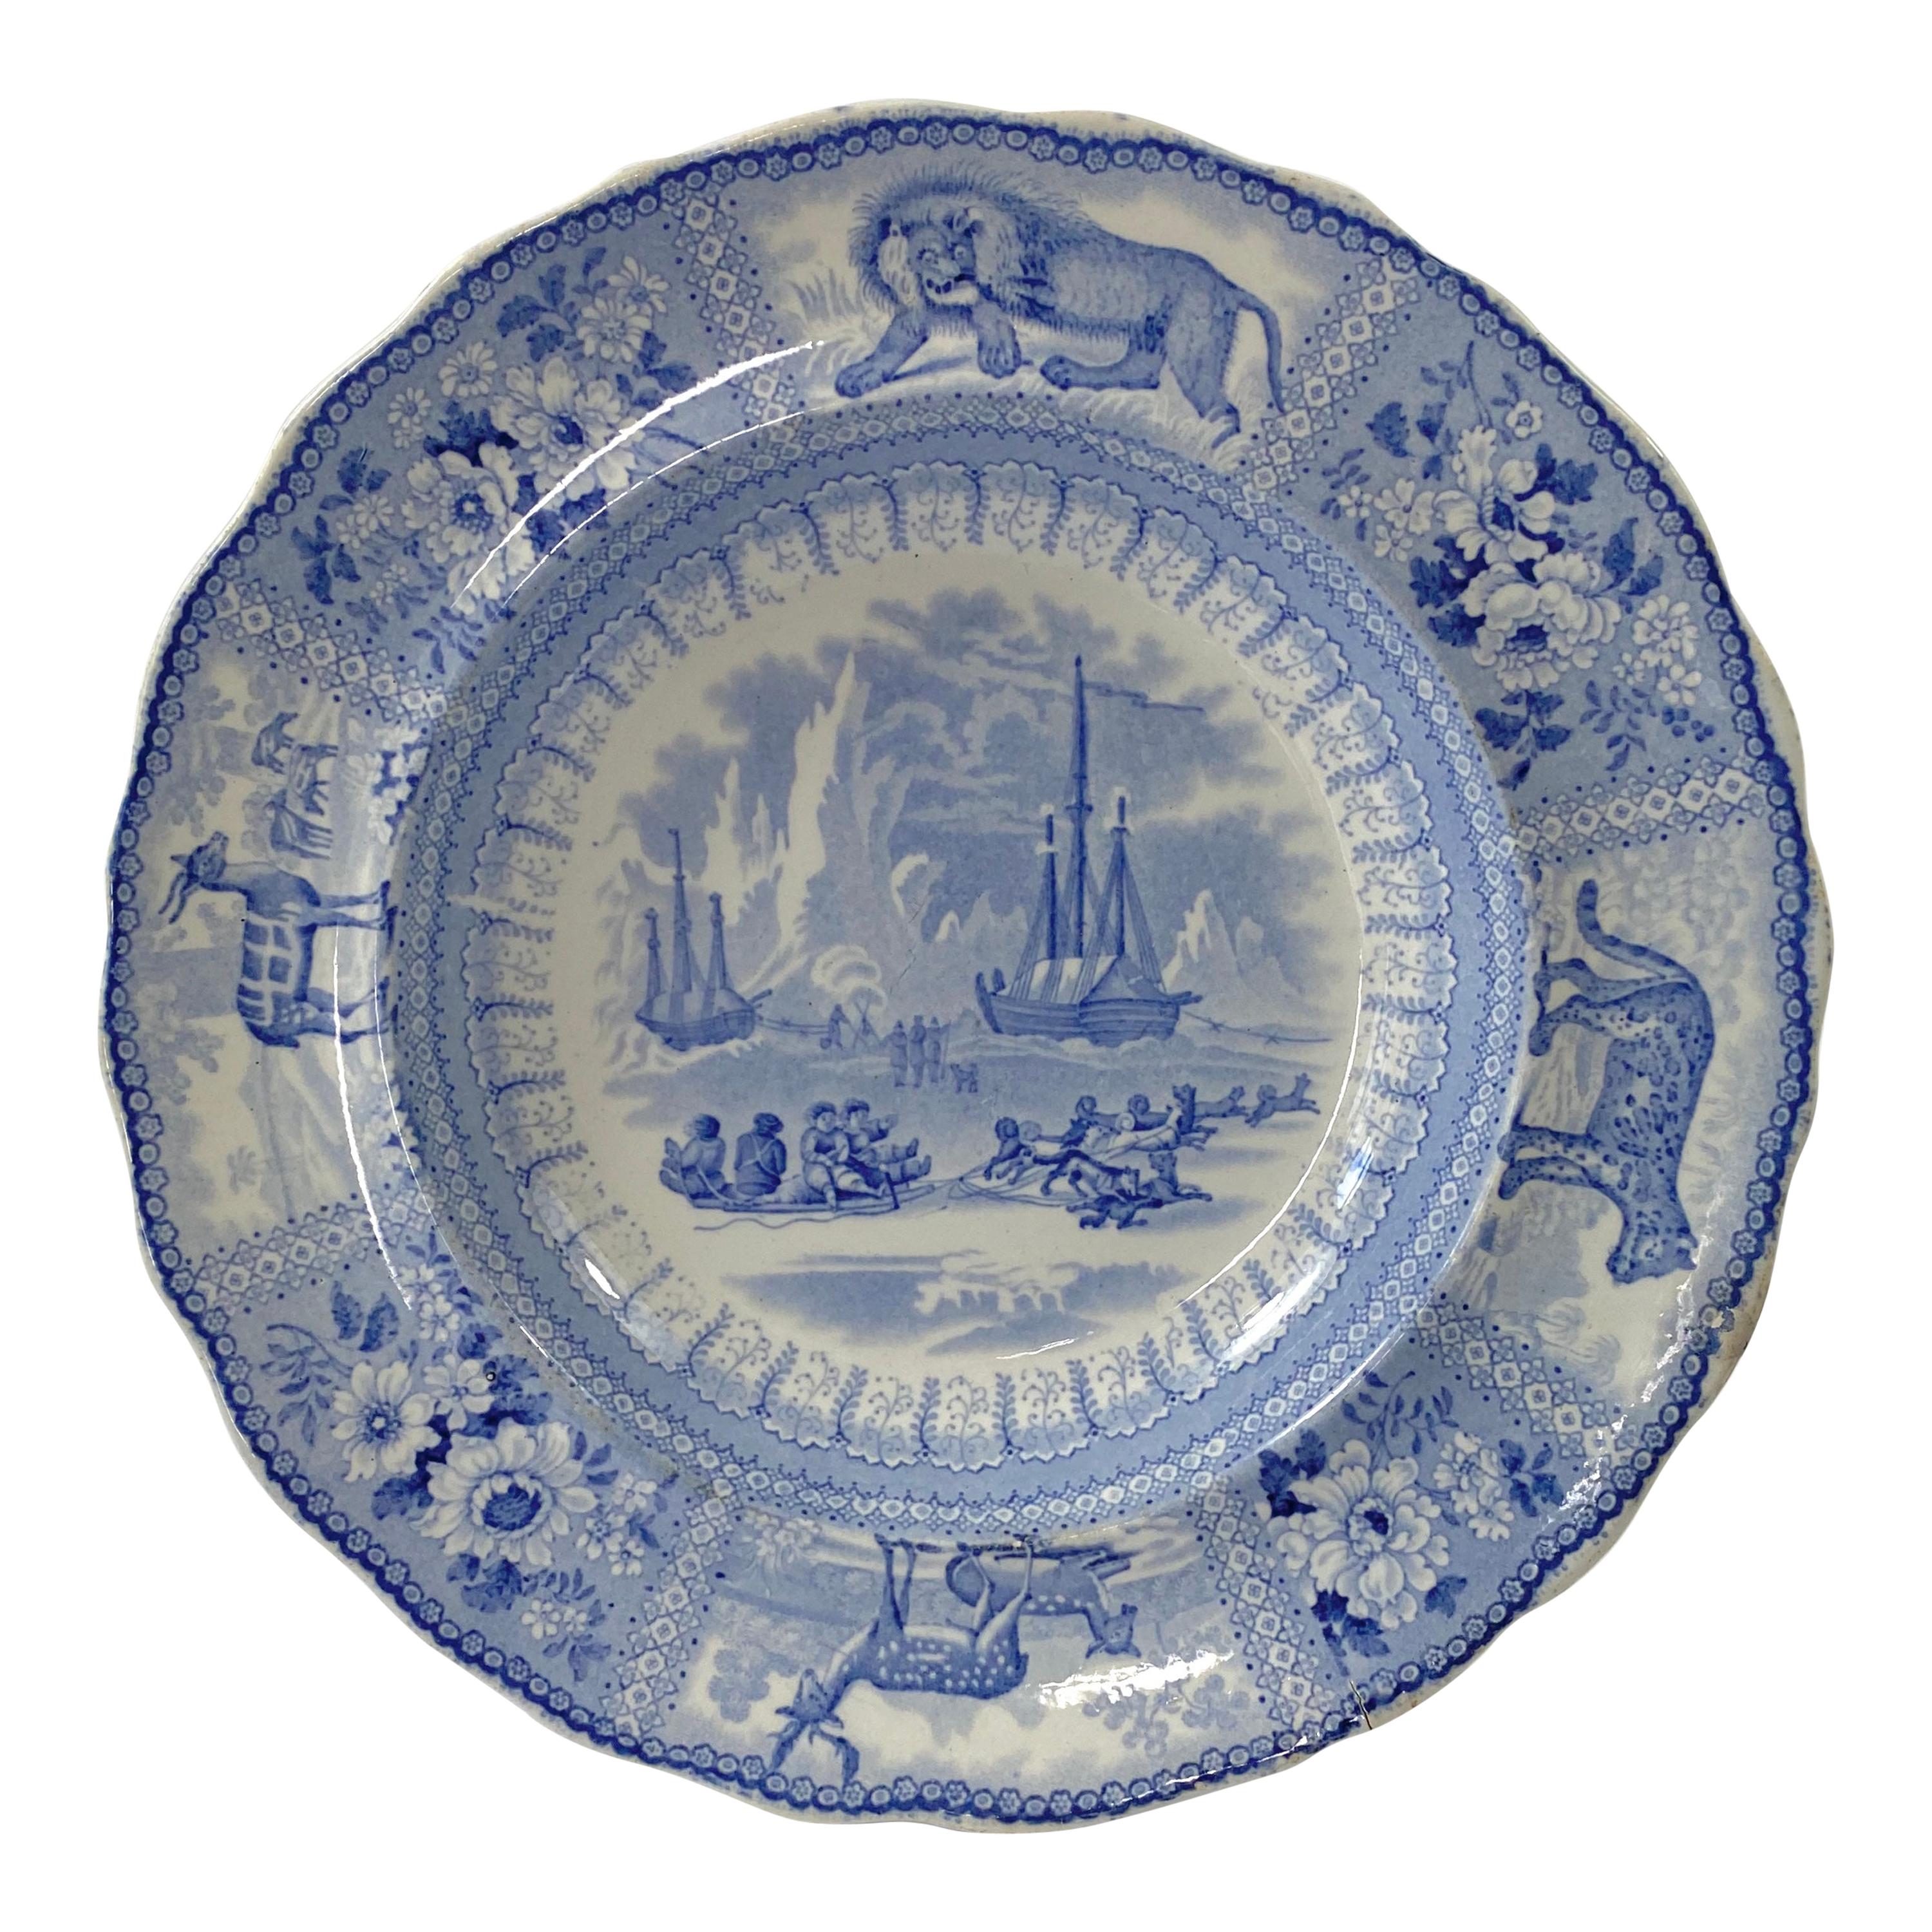 Staffordshire ‘Arctic Scenery’ Dish, c. 1835